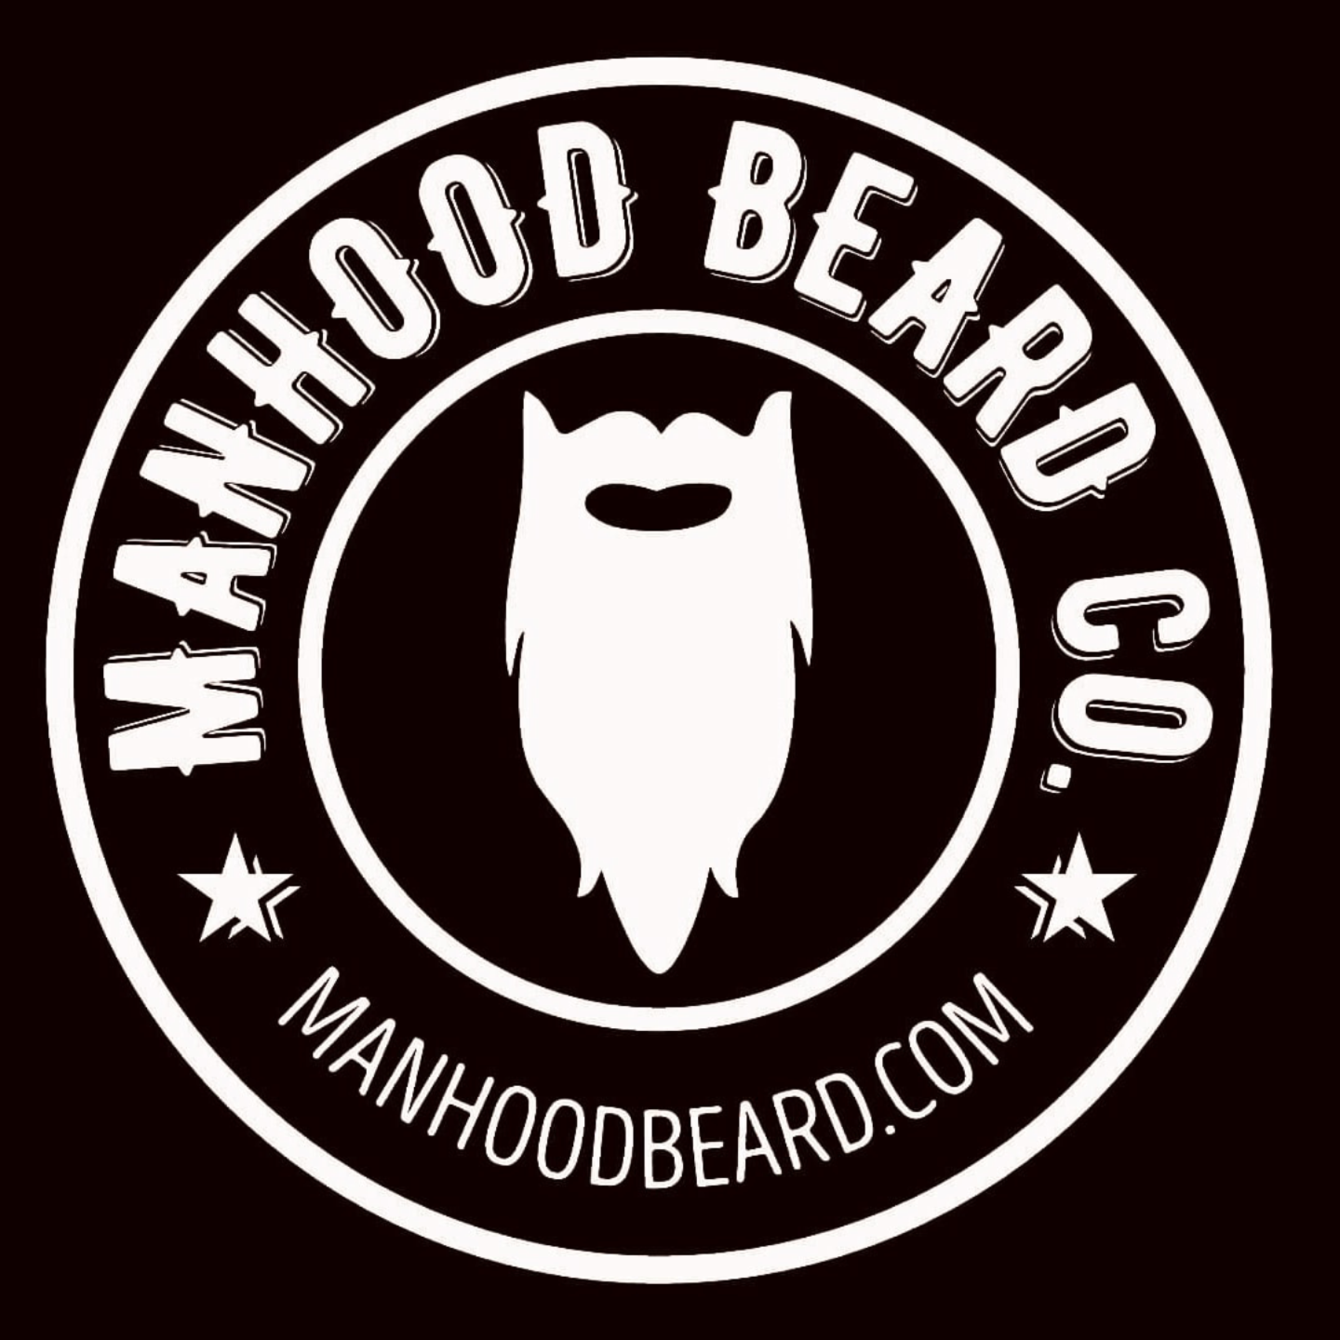 Manhood Beard